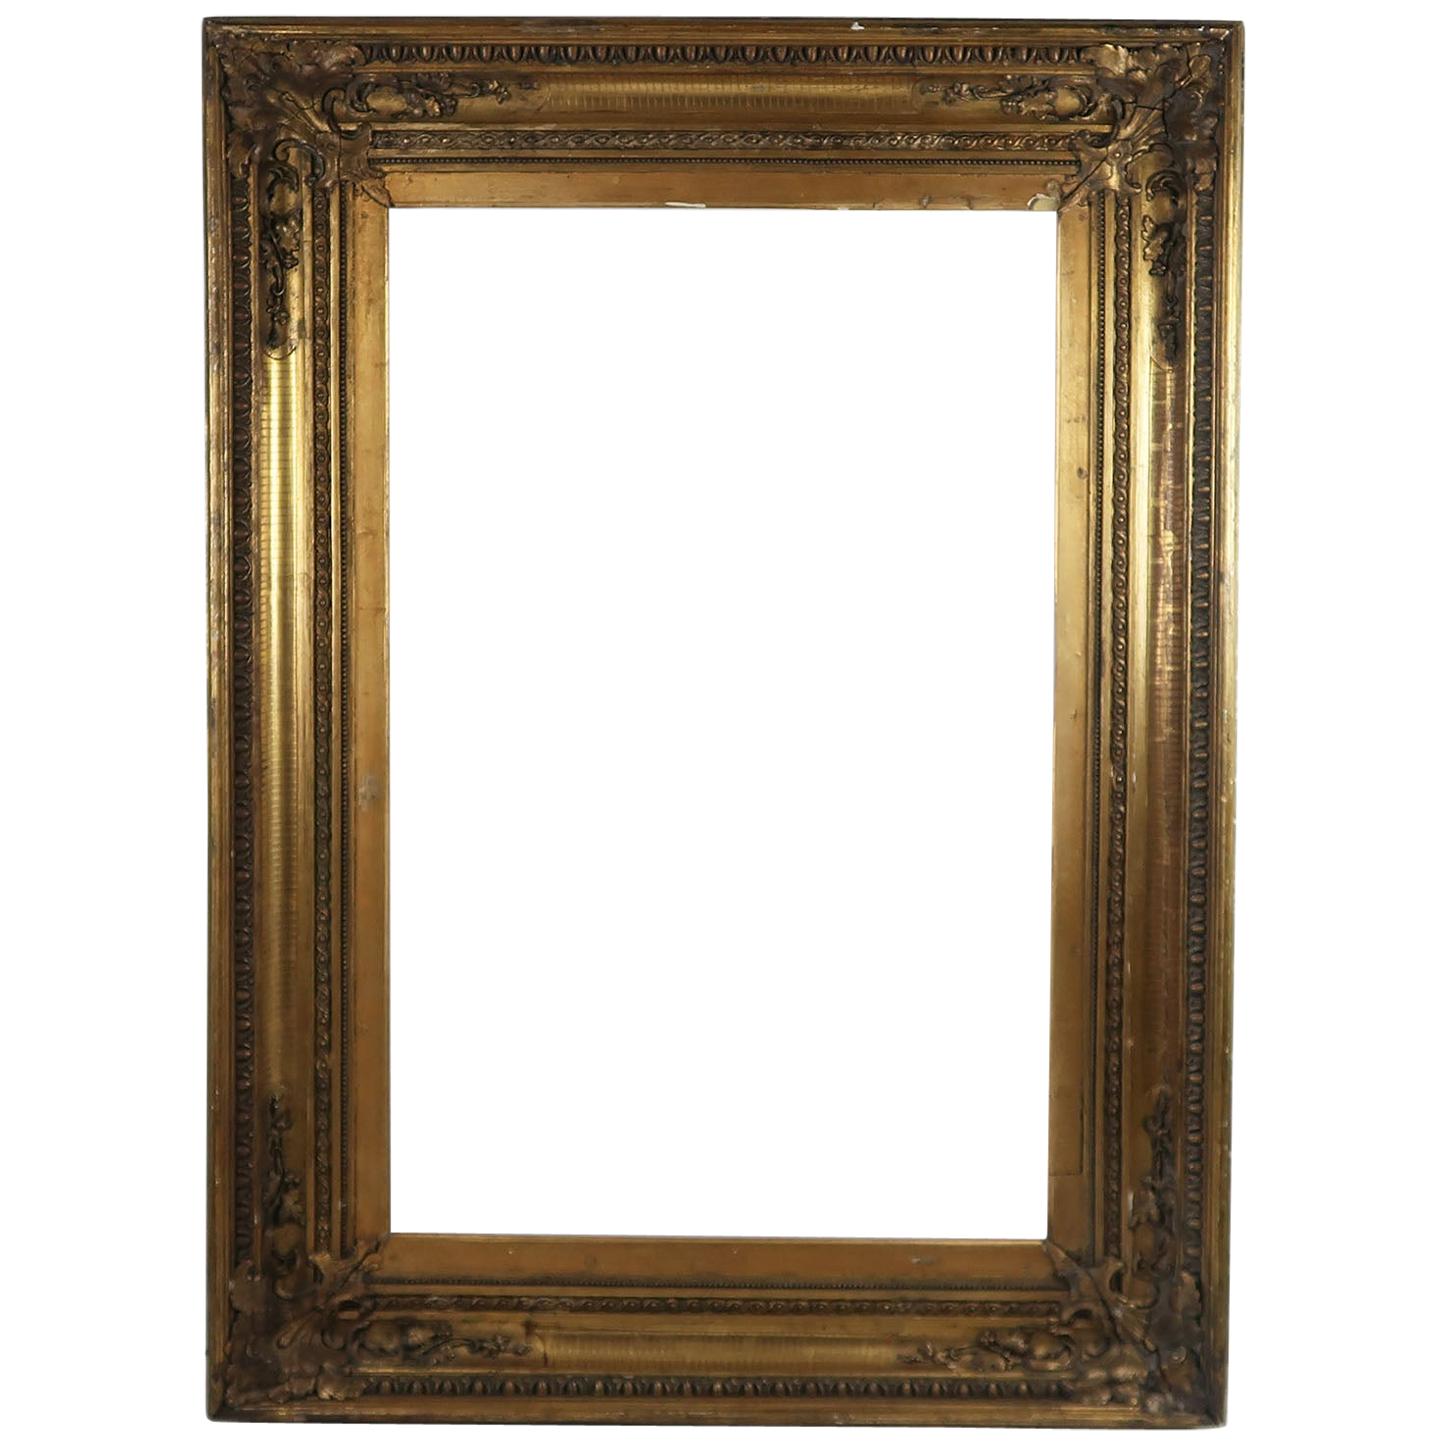 Large Antique Gilt Picture Frame in Renaissance Revival Style